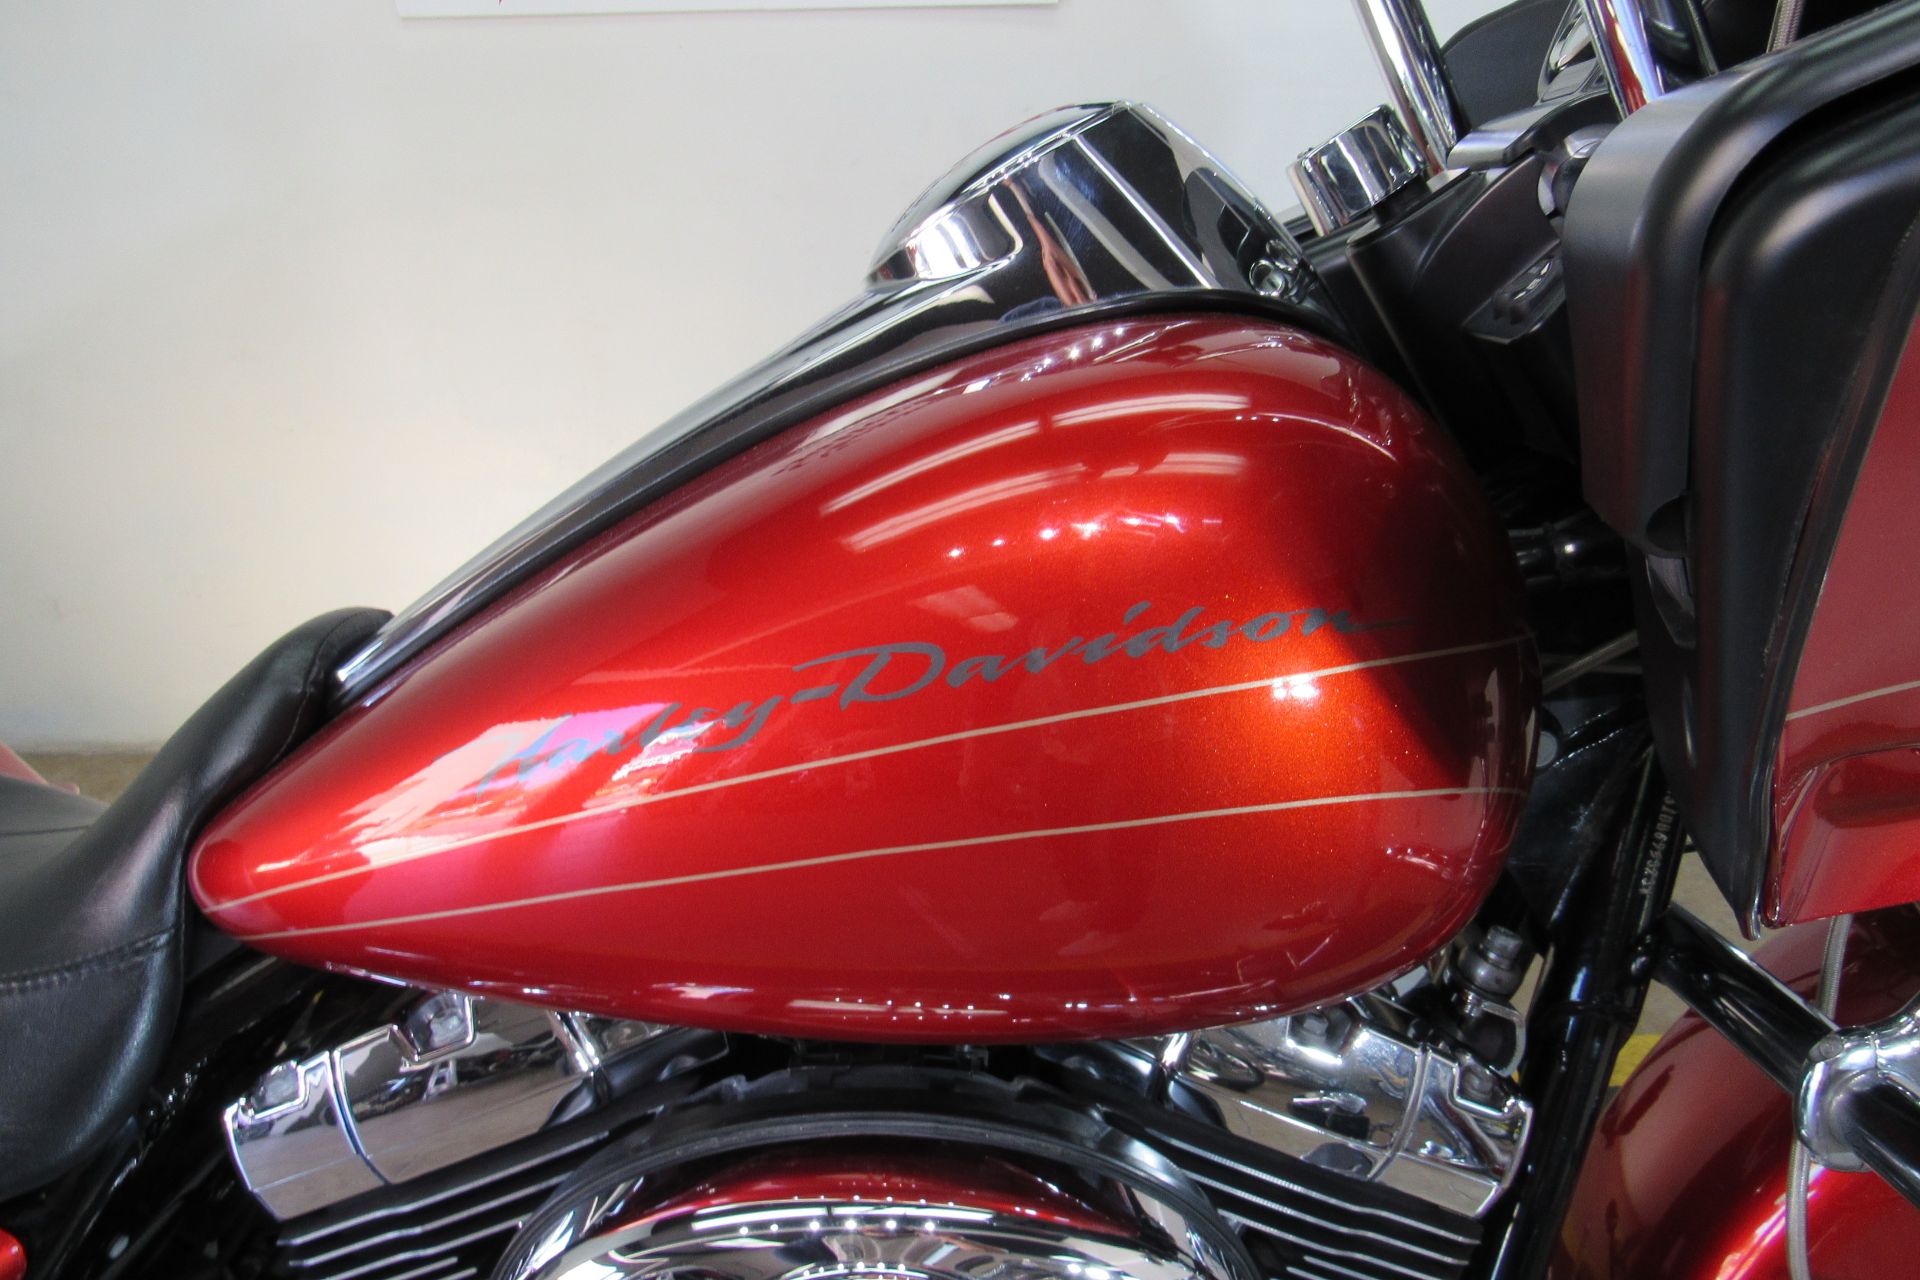 2013 Harley-Davidson Road Glide® Custom in Temecula, California - Photo 13